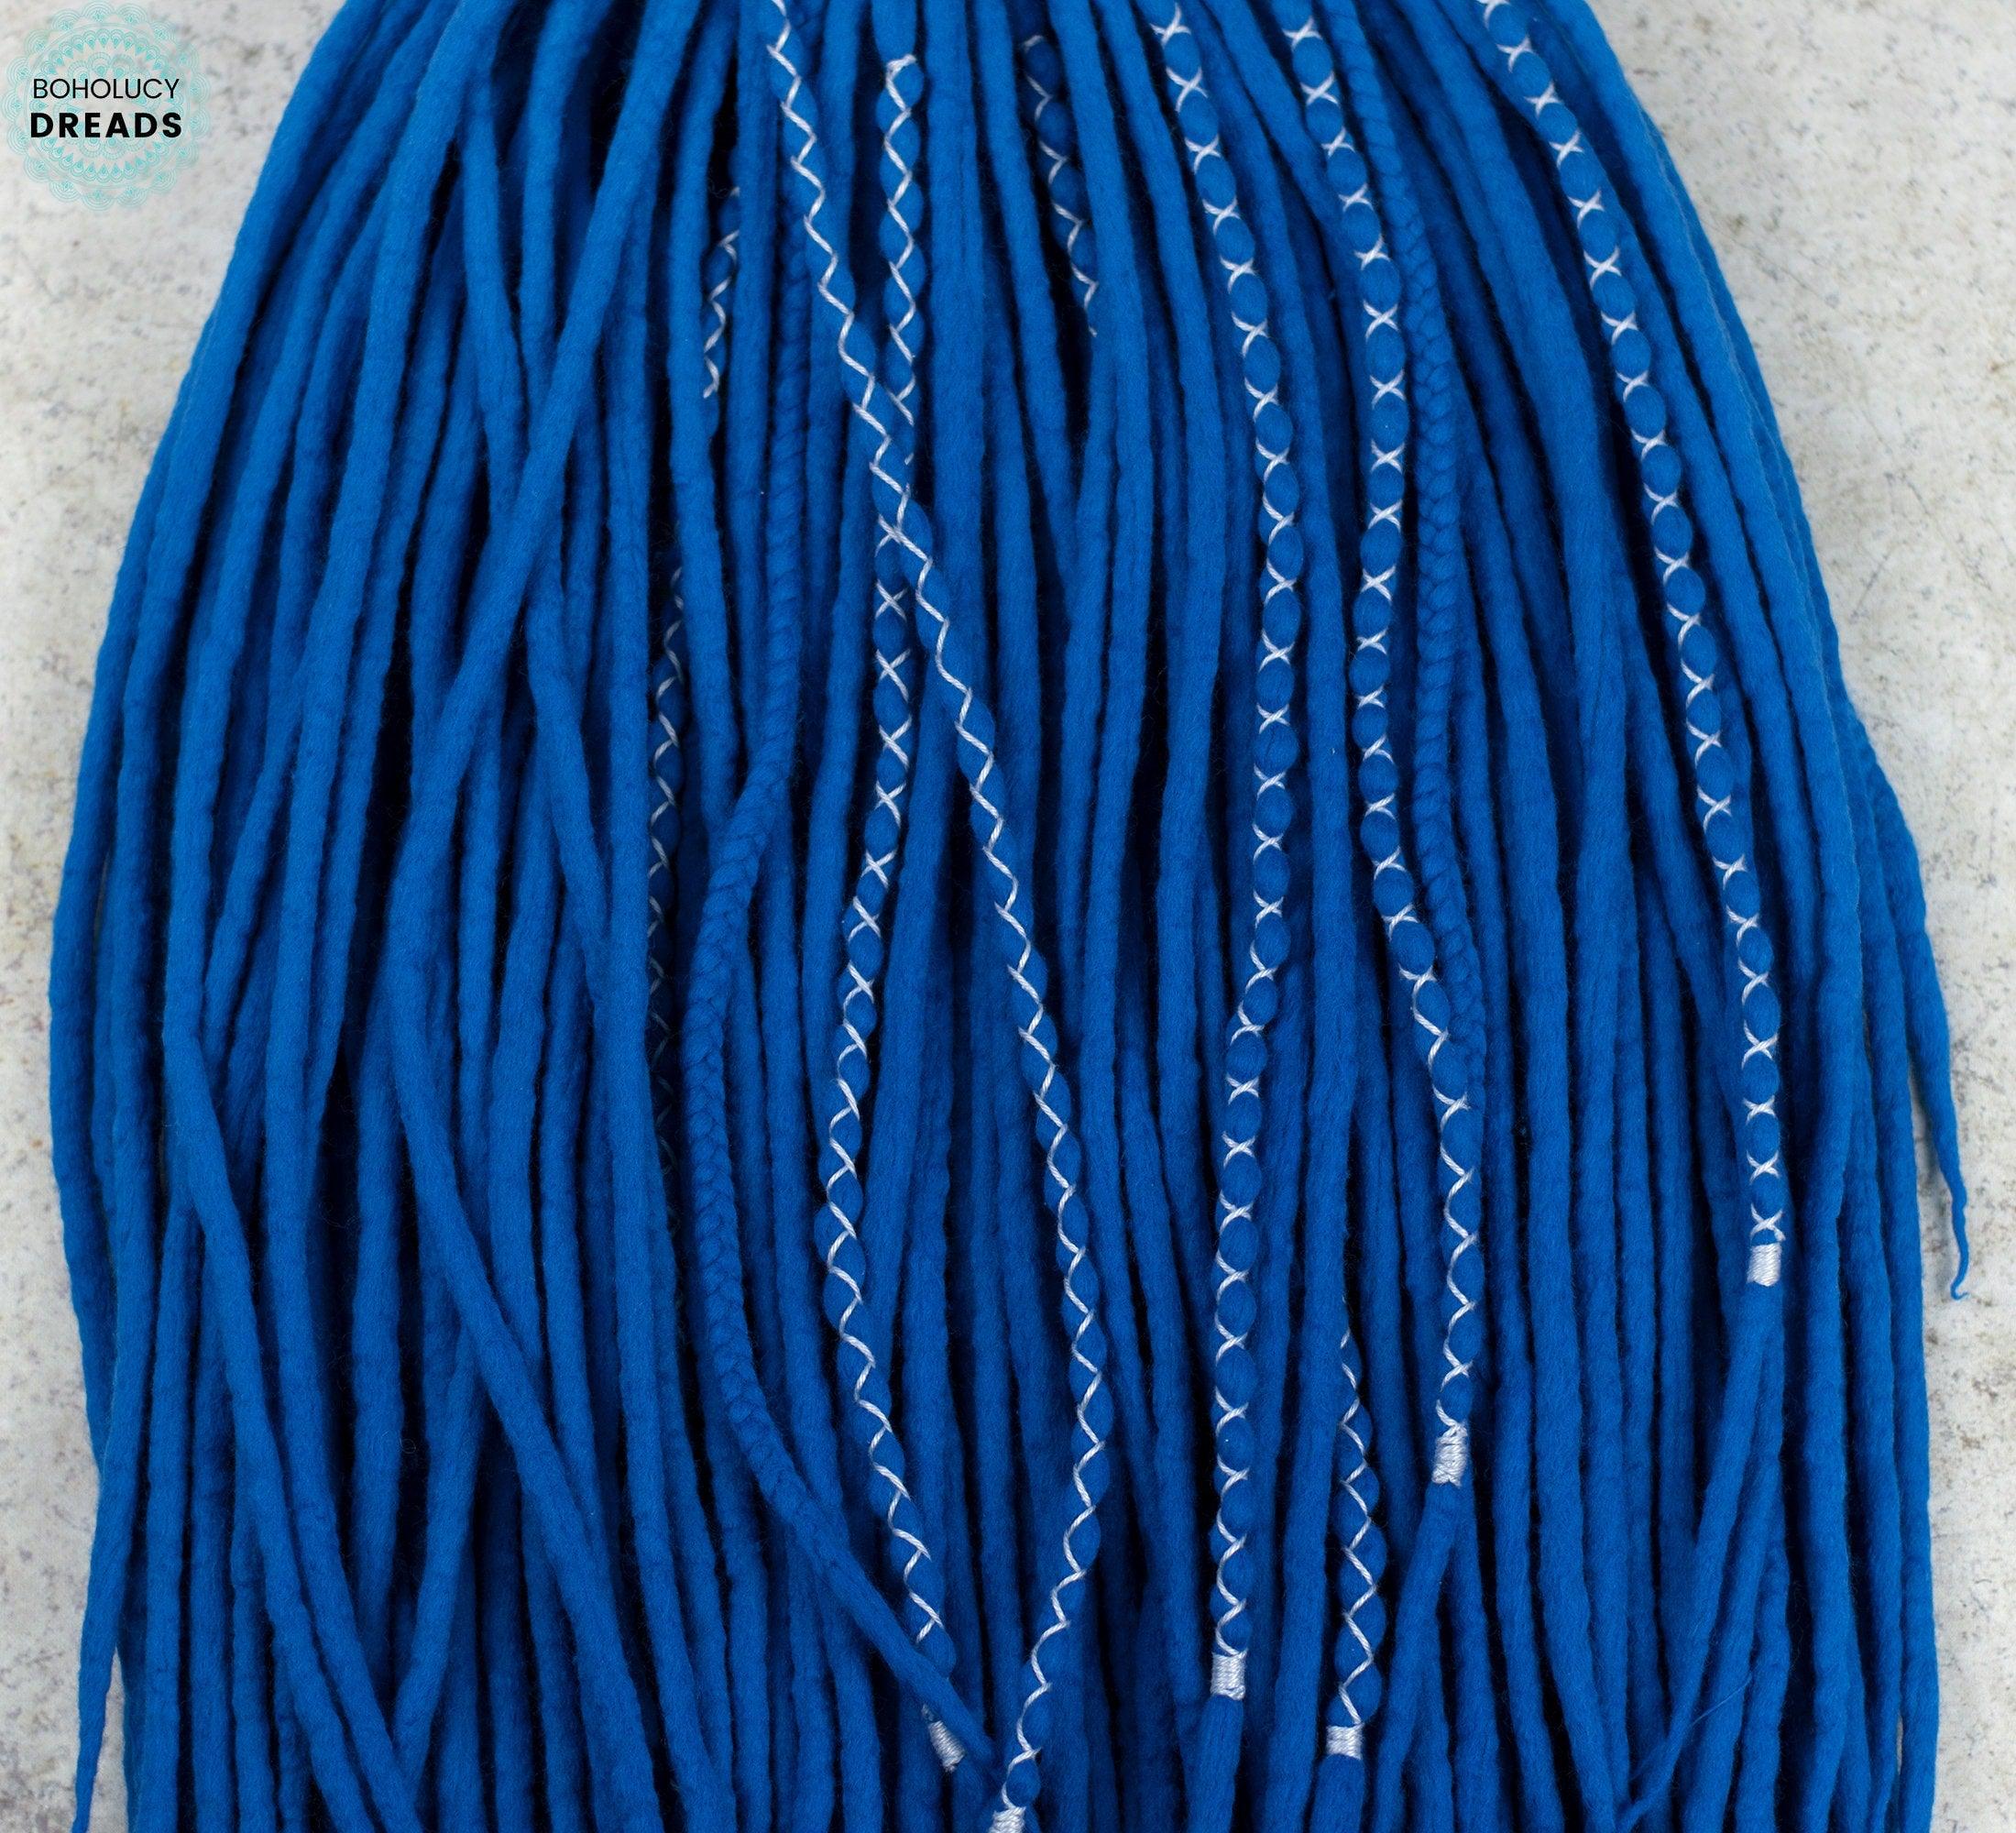 Royal blue merino wool dreadlocks